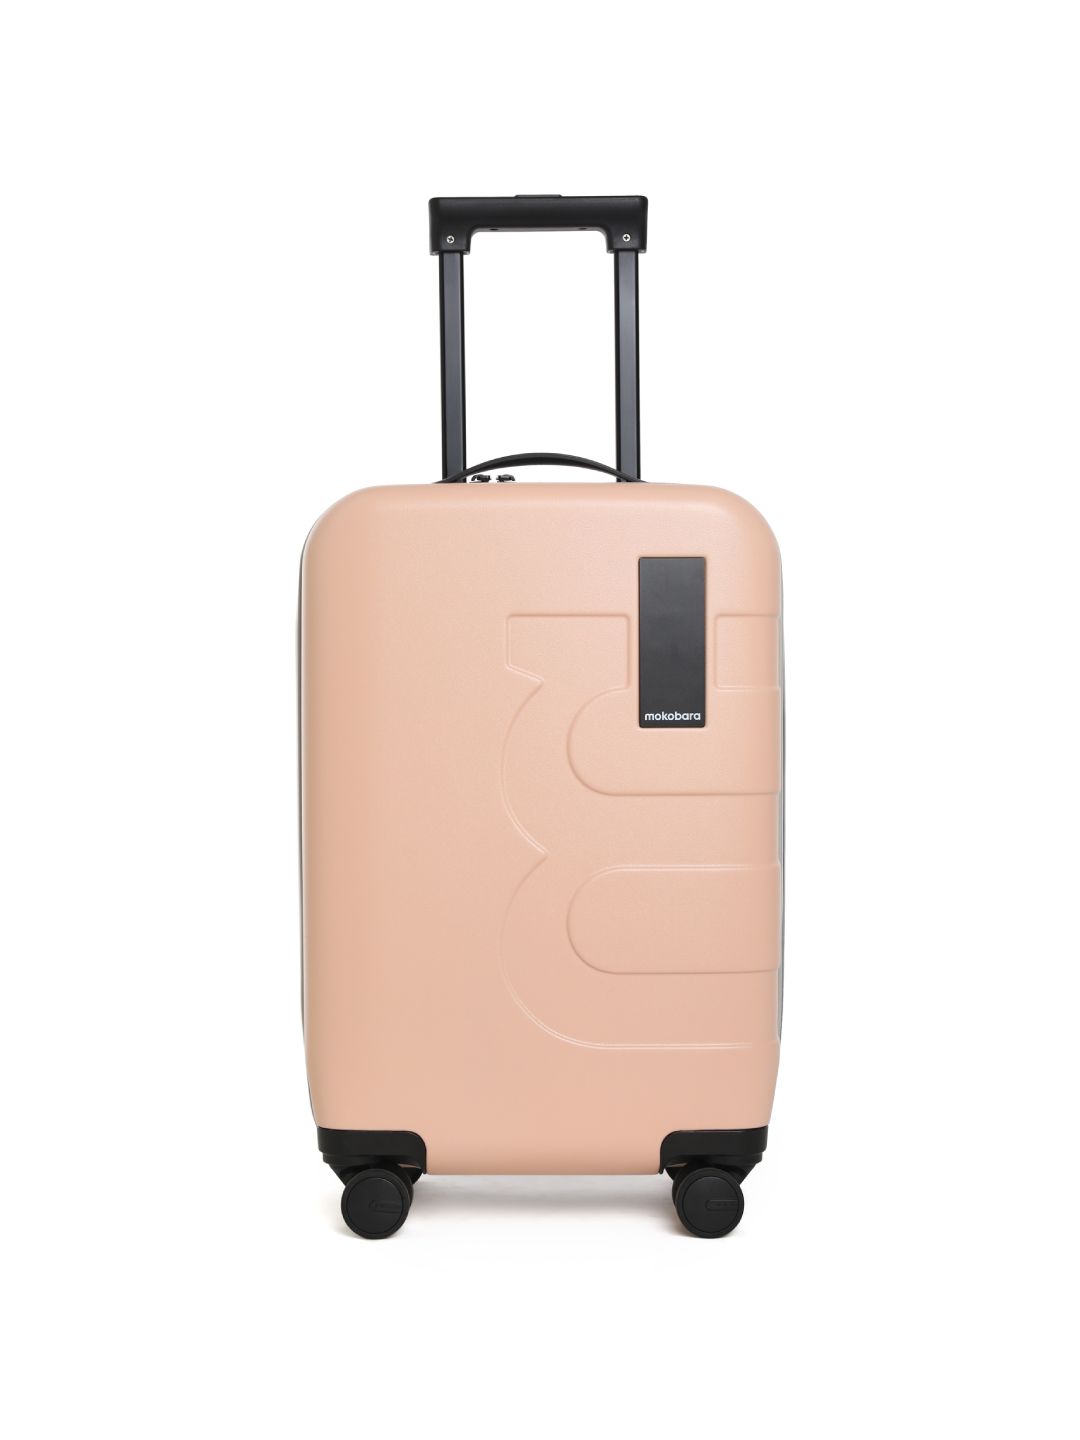 Buy MOKOBARA MOKOBARA Hard-Sided Medium Trolley Suitcase at Redfynd